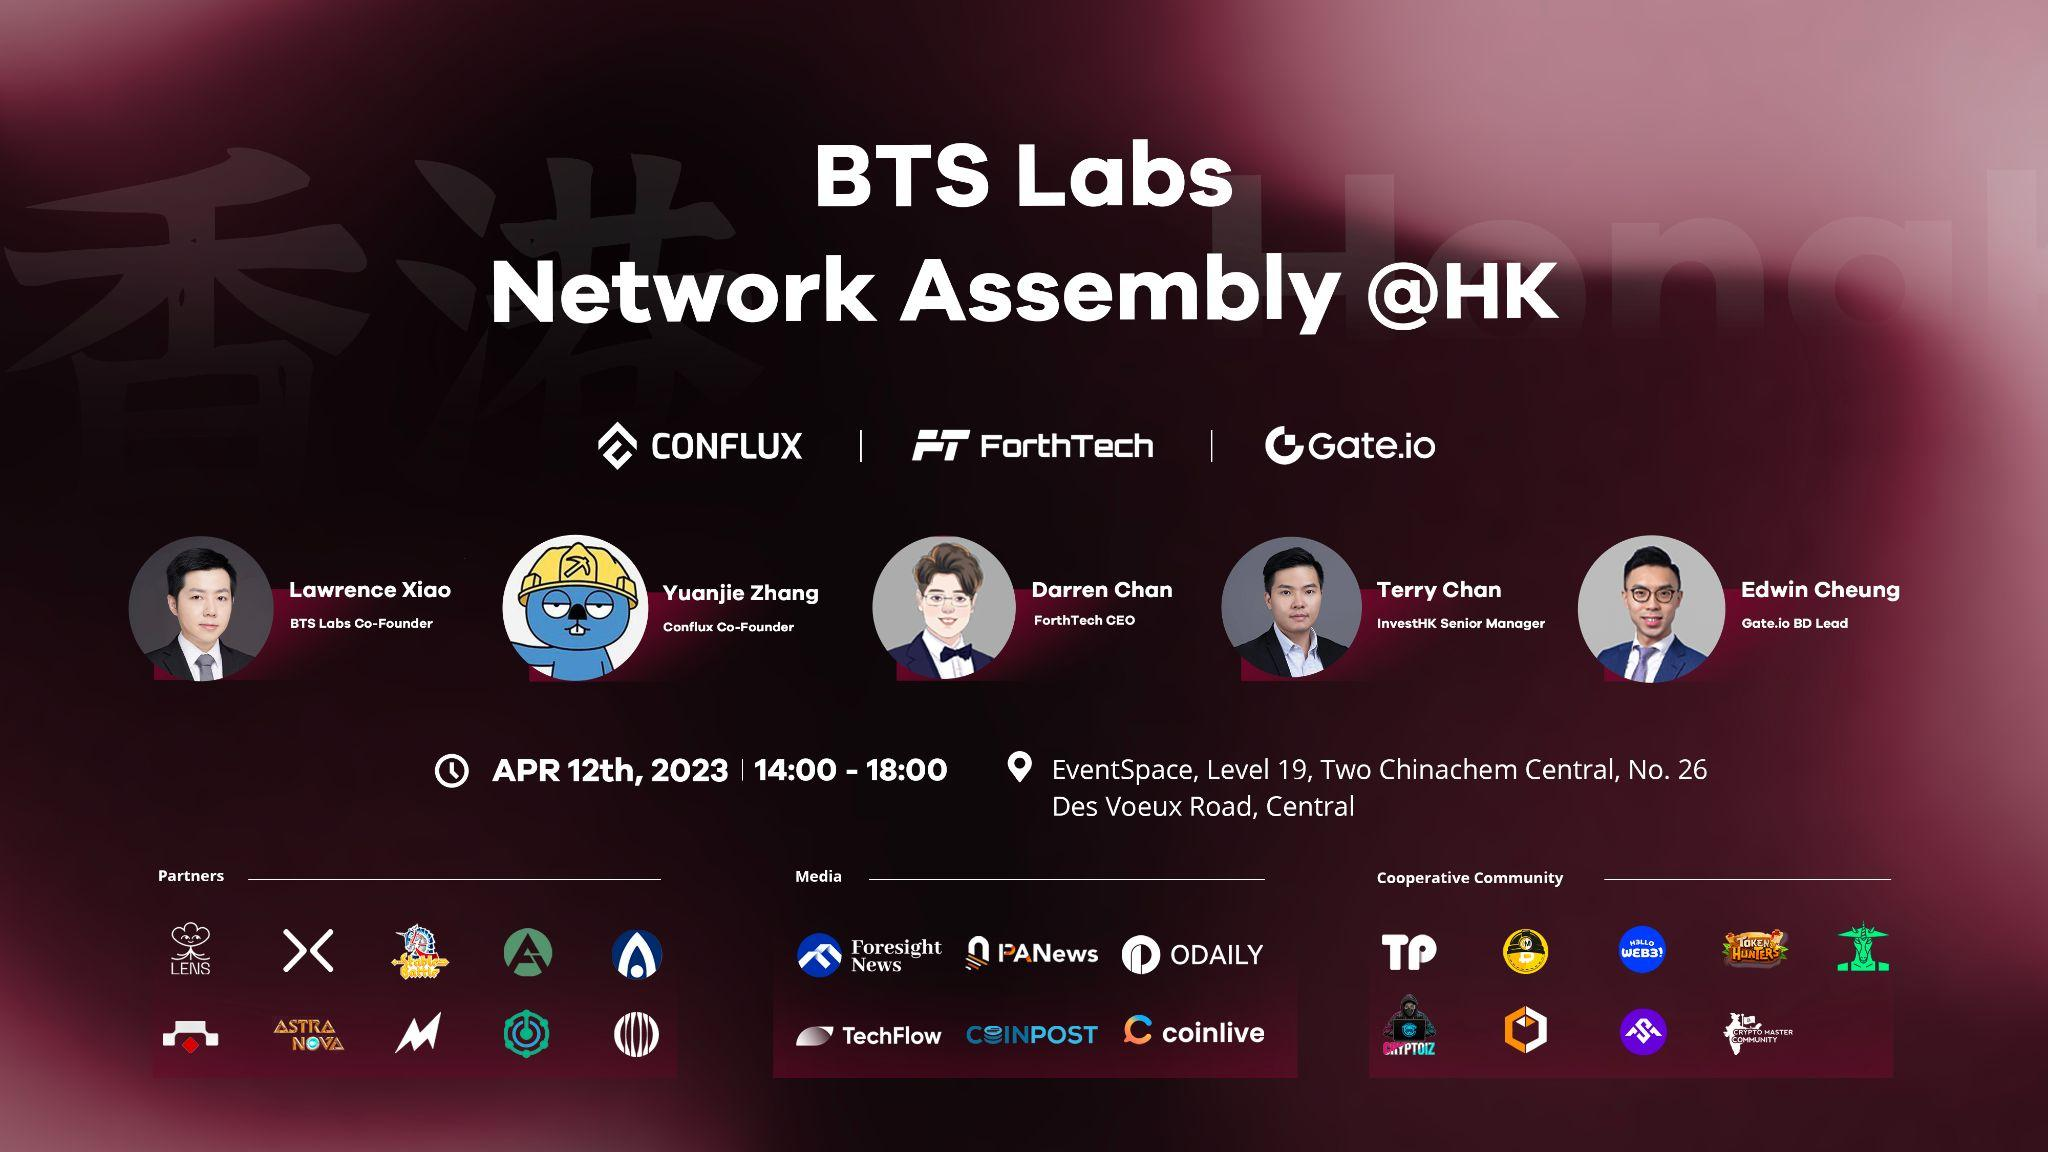 BTS Labs 主办的 BTS Labs Network Assembly @HK 于 4 月 12 日在香港圆满举行